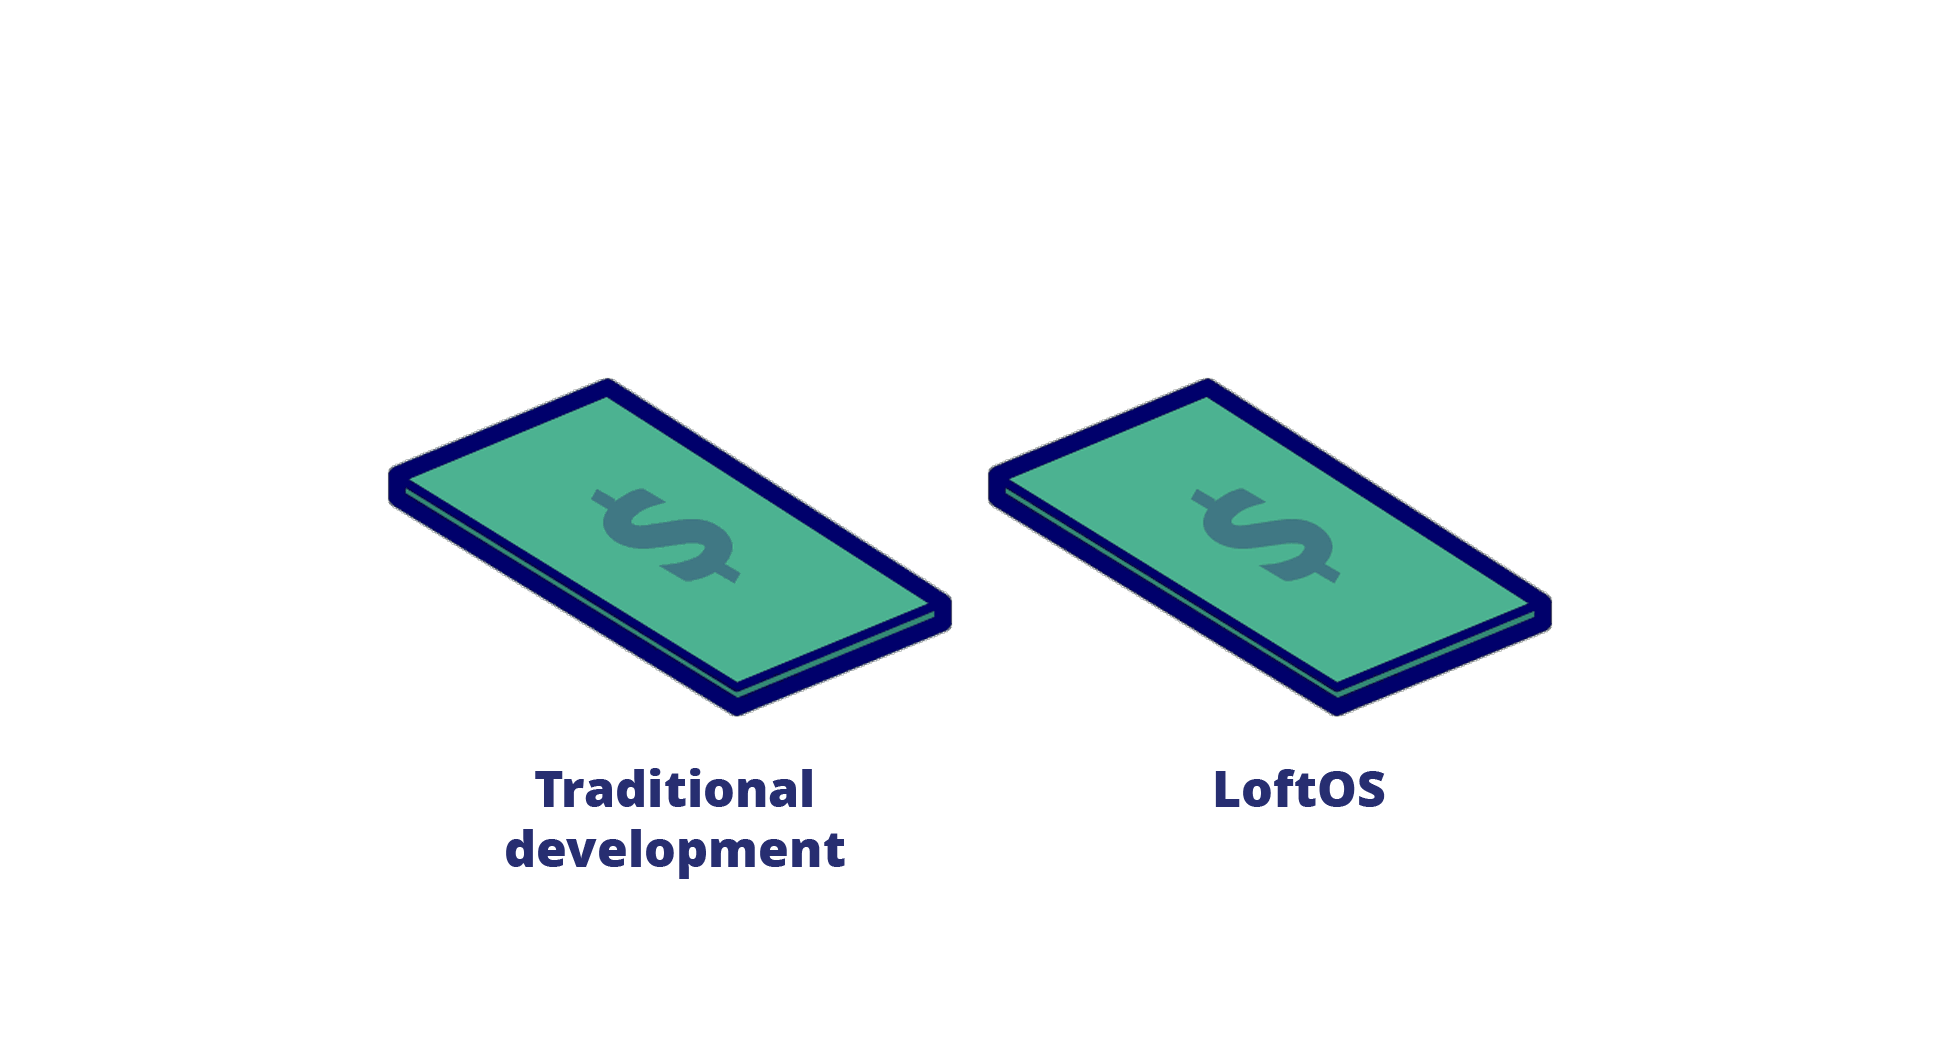 Spend 80% less money on development with LoftOS